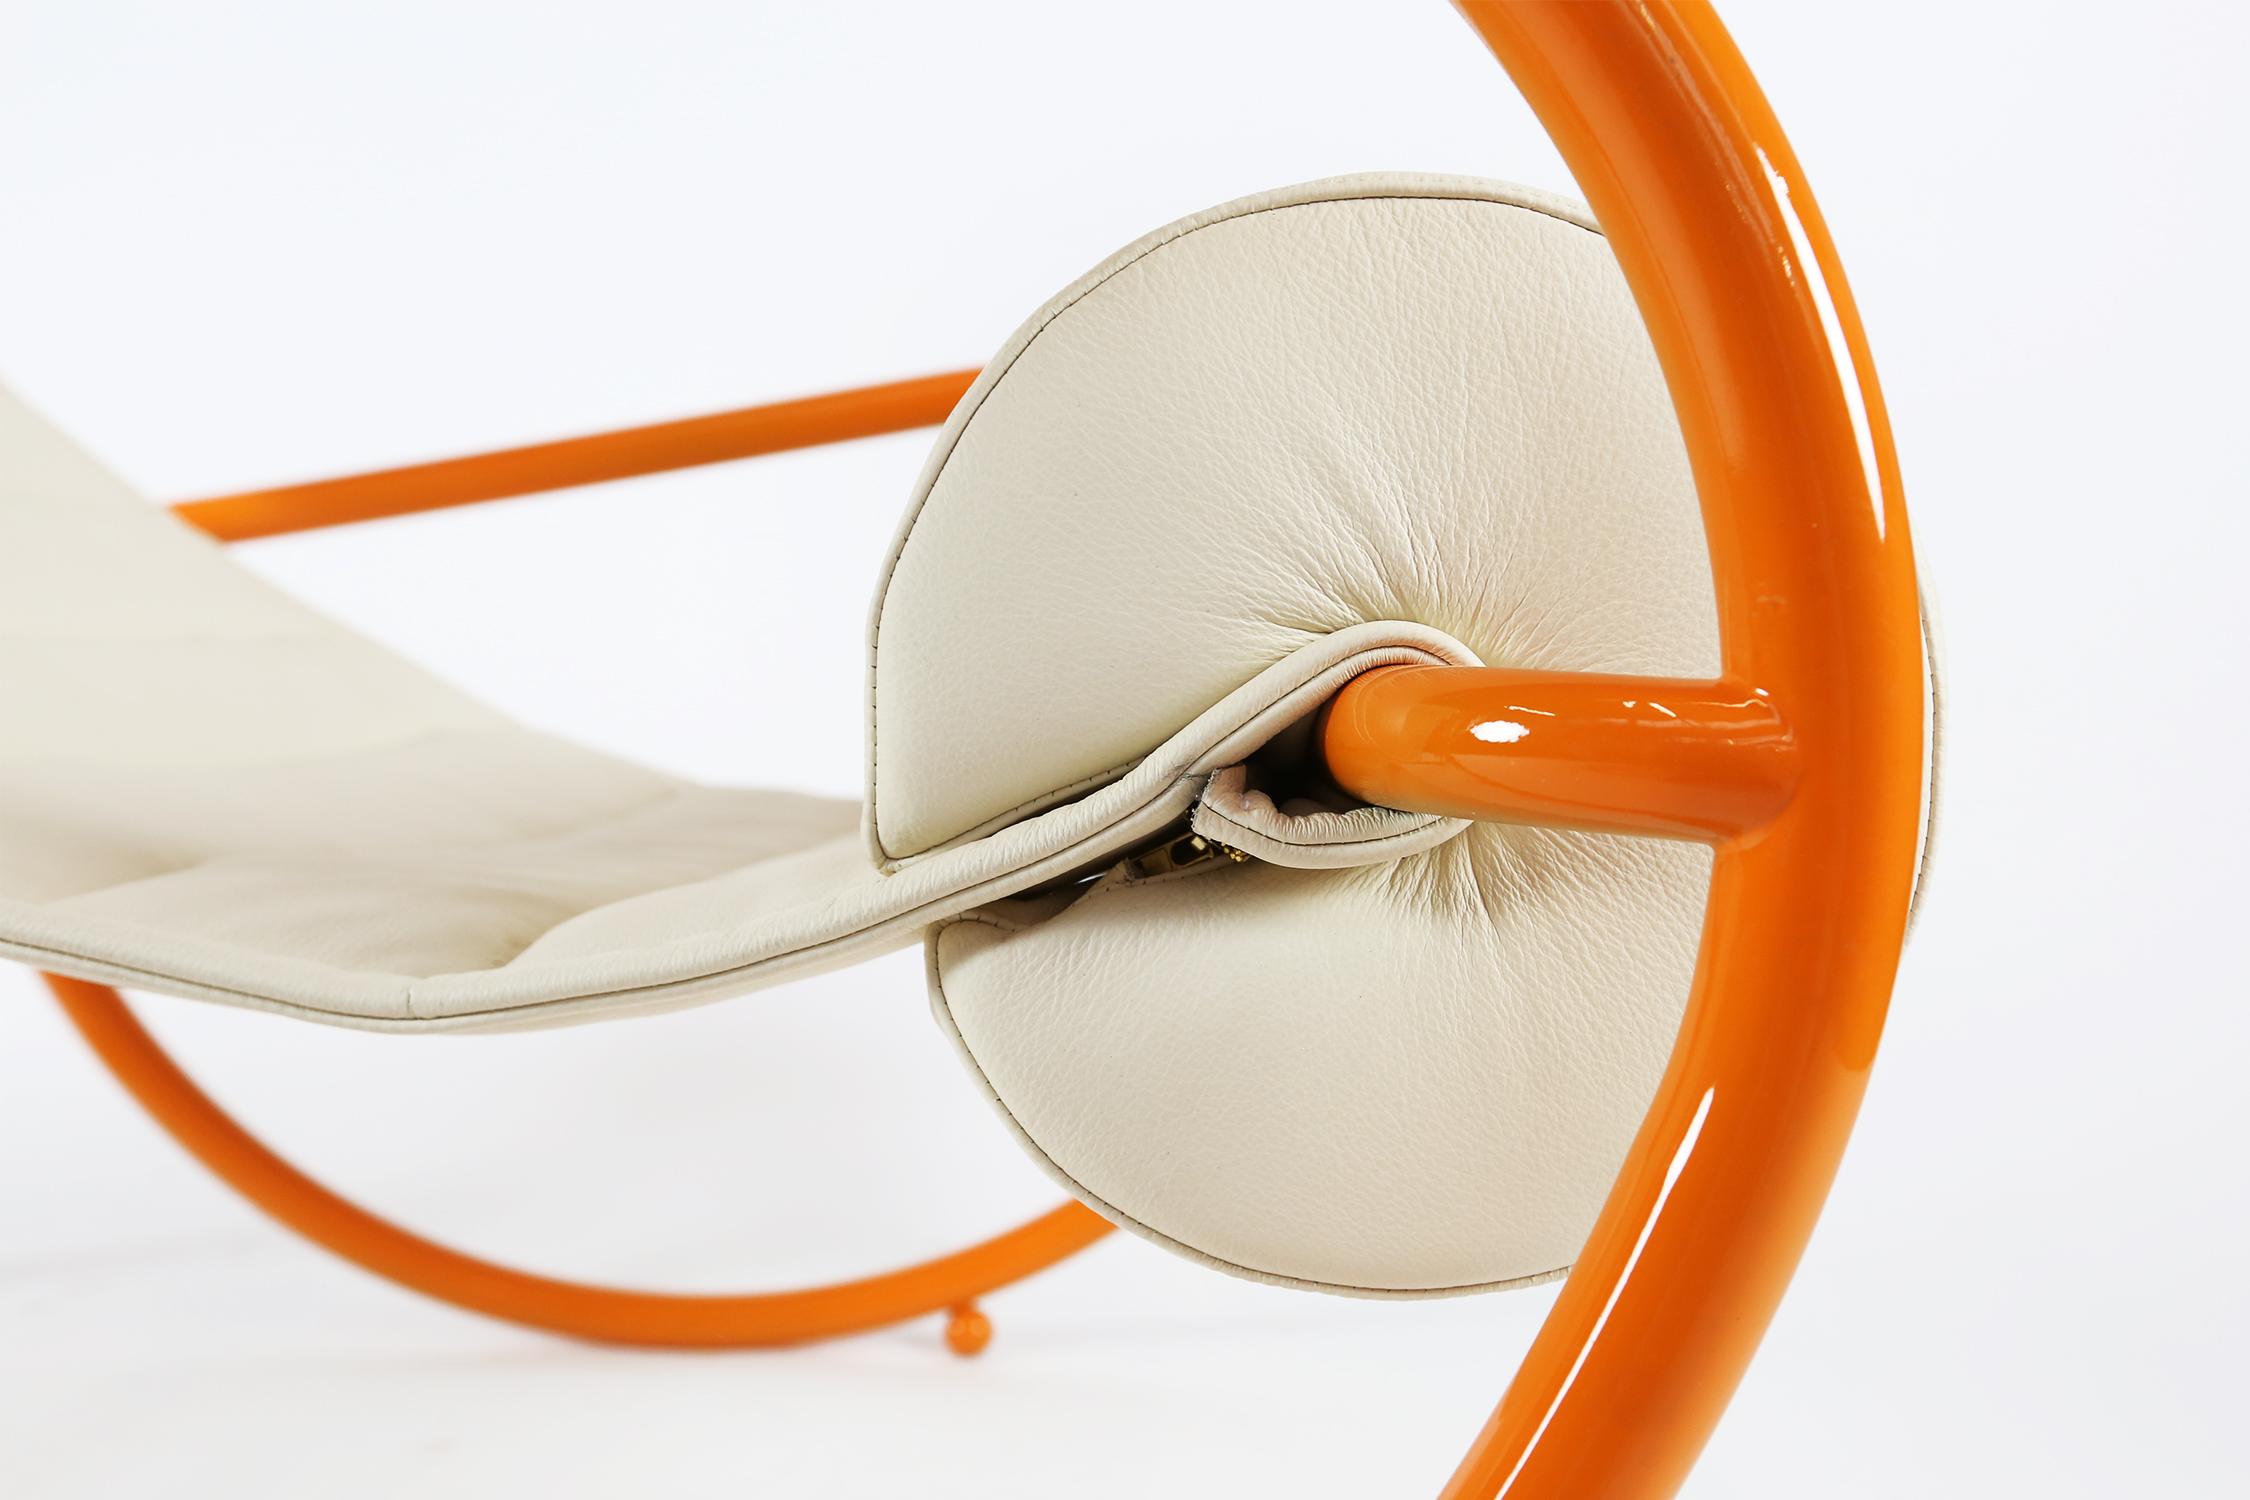 Italian Gae Aulenti Locus Solus Lounge Chair in Orange Colored Metal and Leather